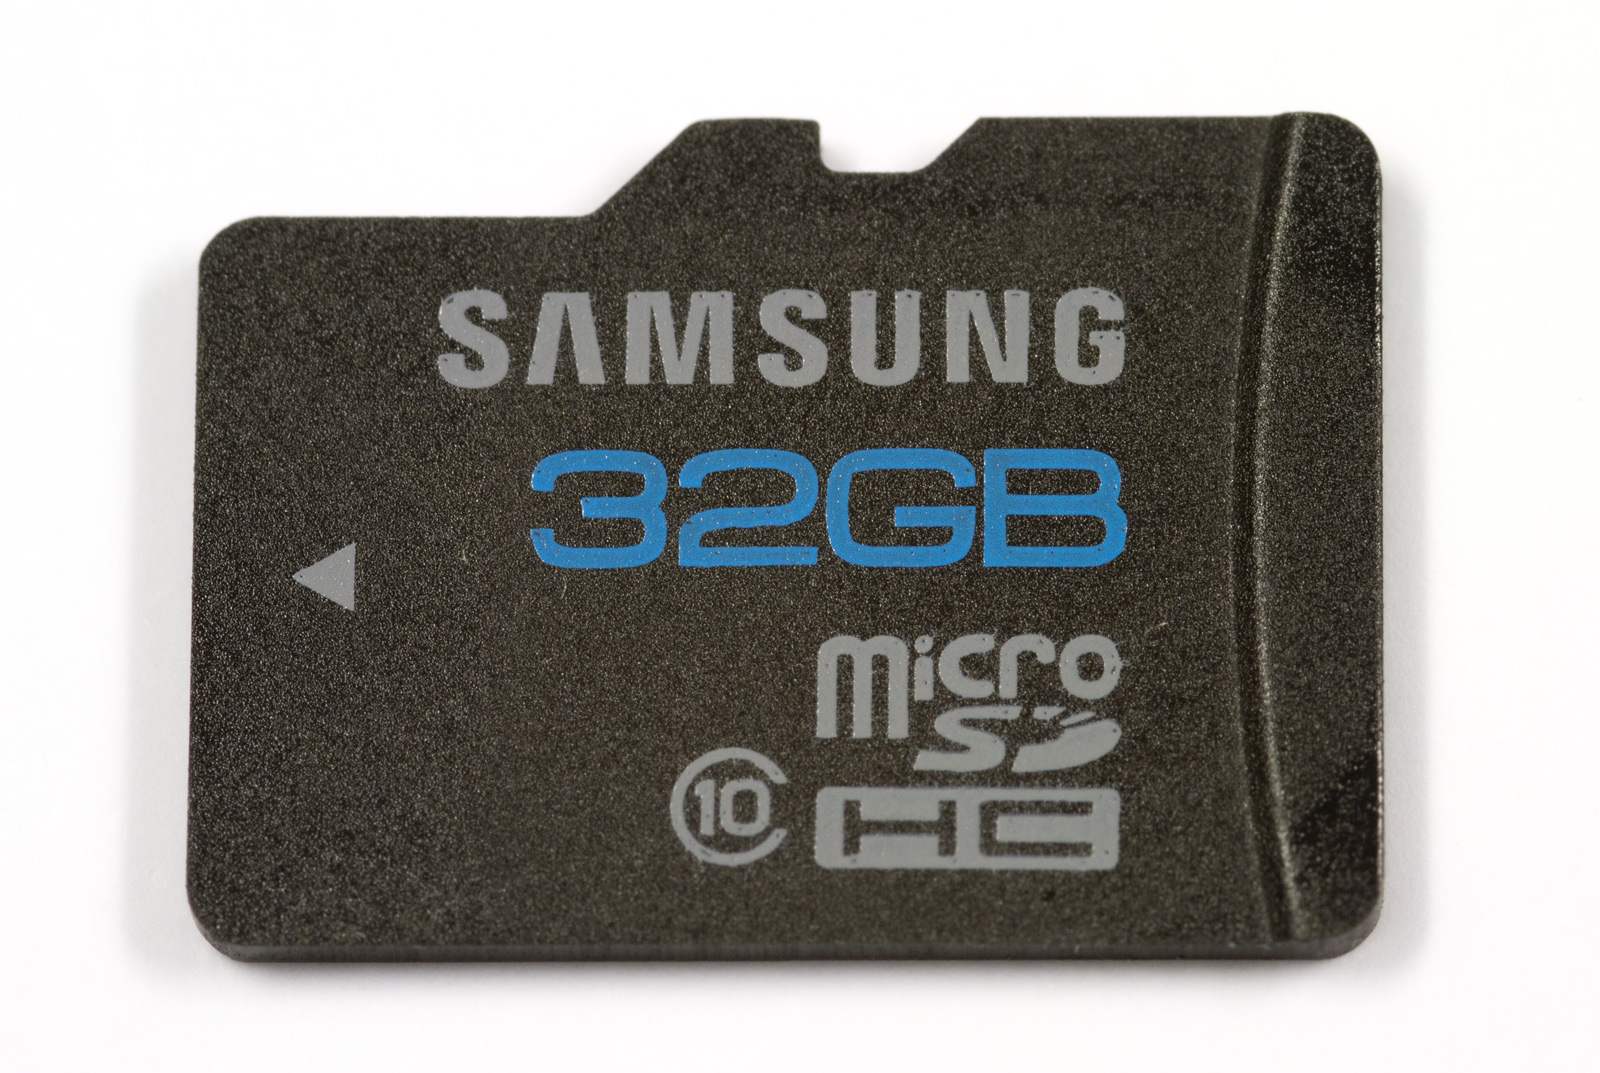 Лучшие микро сд для видеорегистратора. MICROSD Samsung 32gb. Samsung MICROSDHC 32 ГБ. Микро SD 10 class 32 ГБ для видеорегистратора. Samsung MICROSD 10 class.